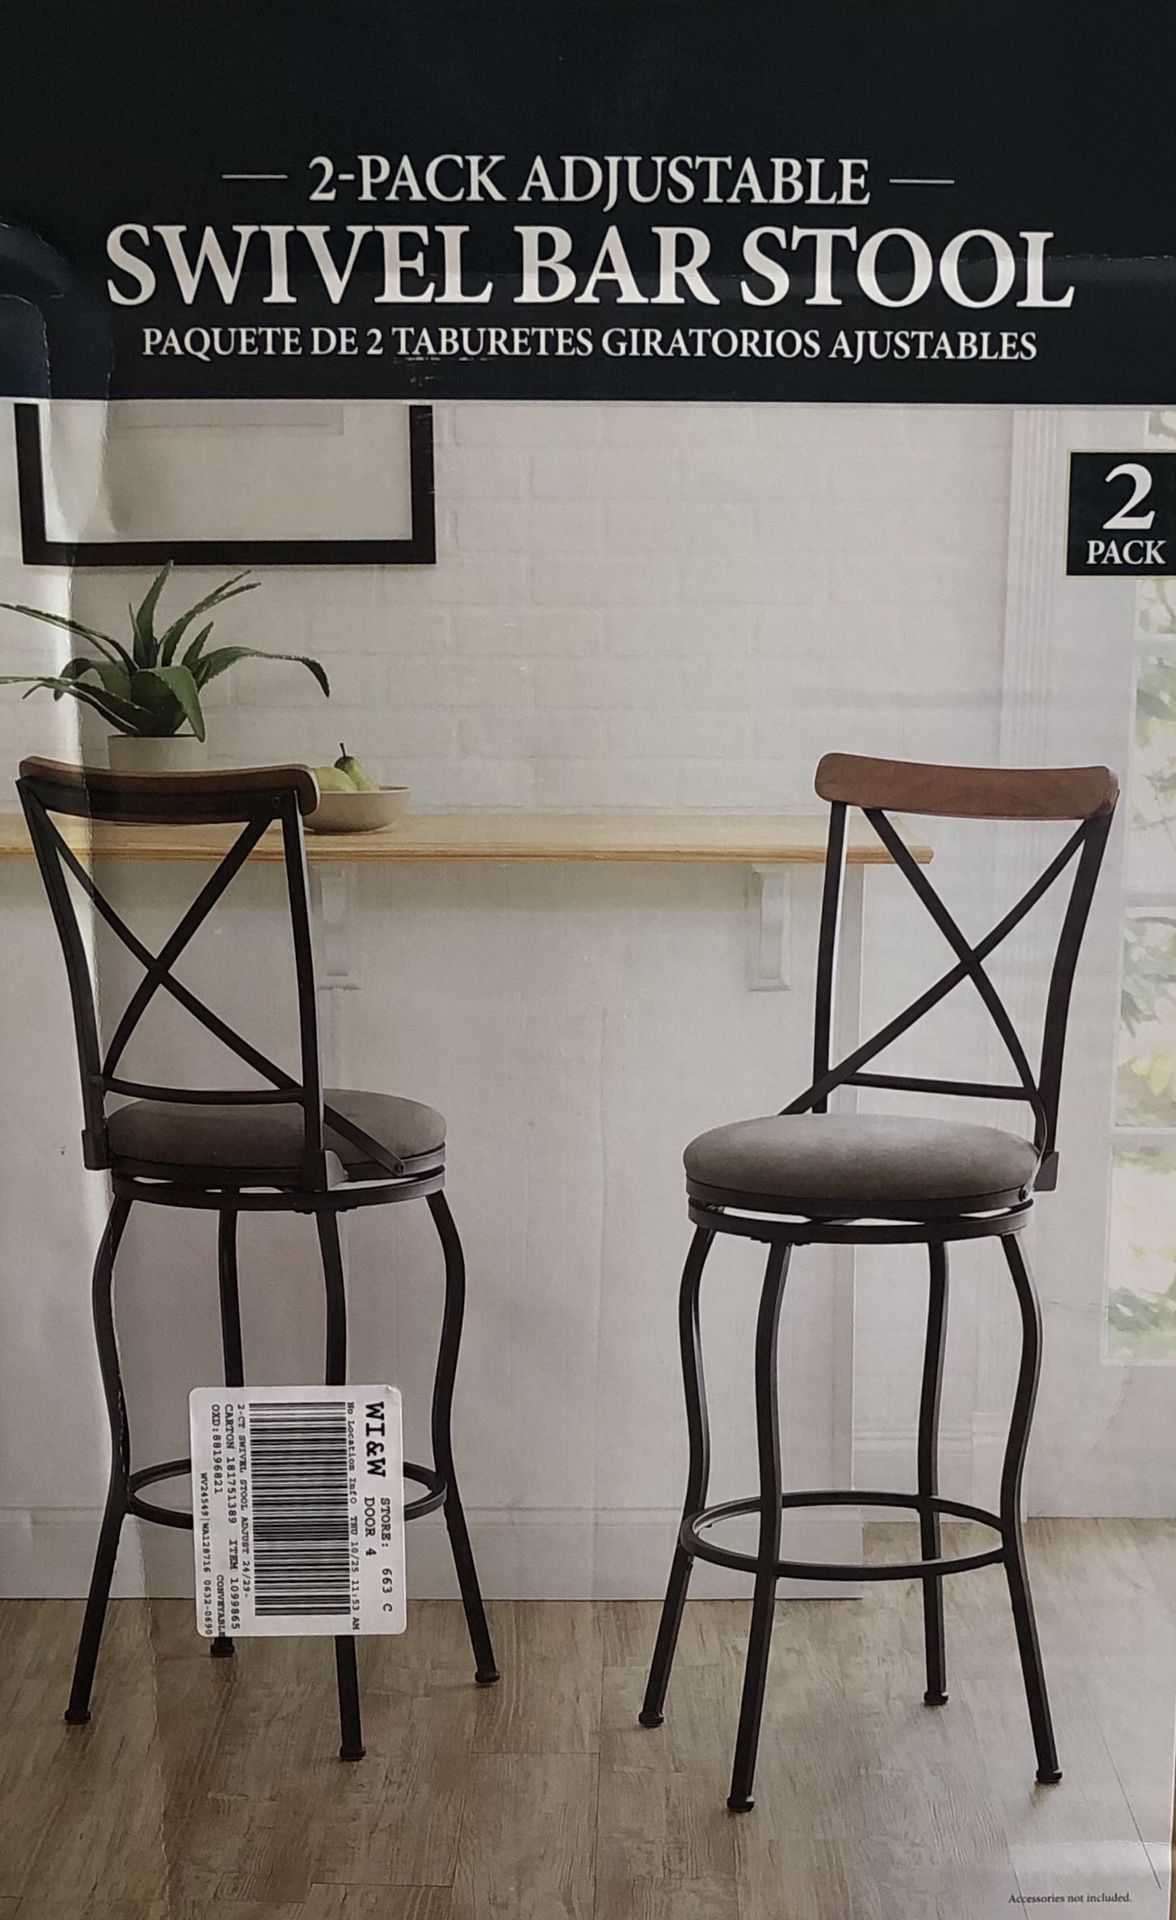 Indoor/Outdoor Bistro Table w/chairs!